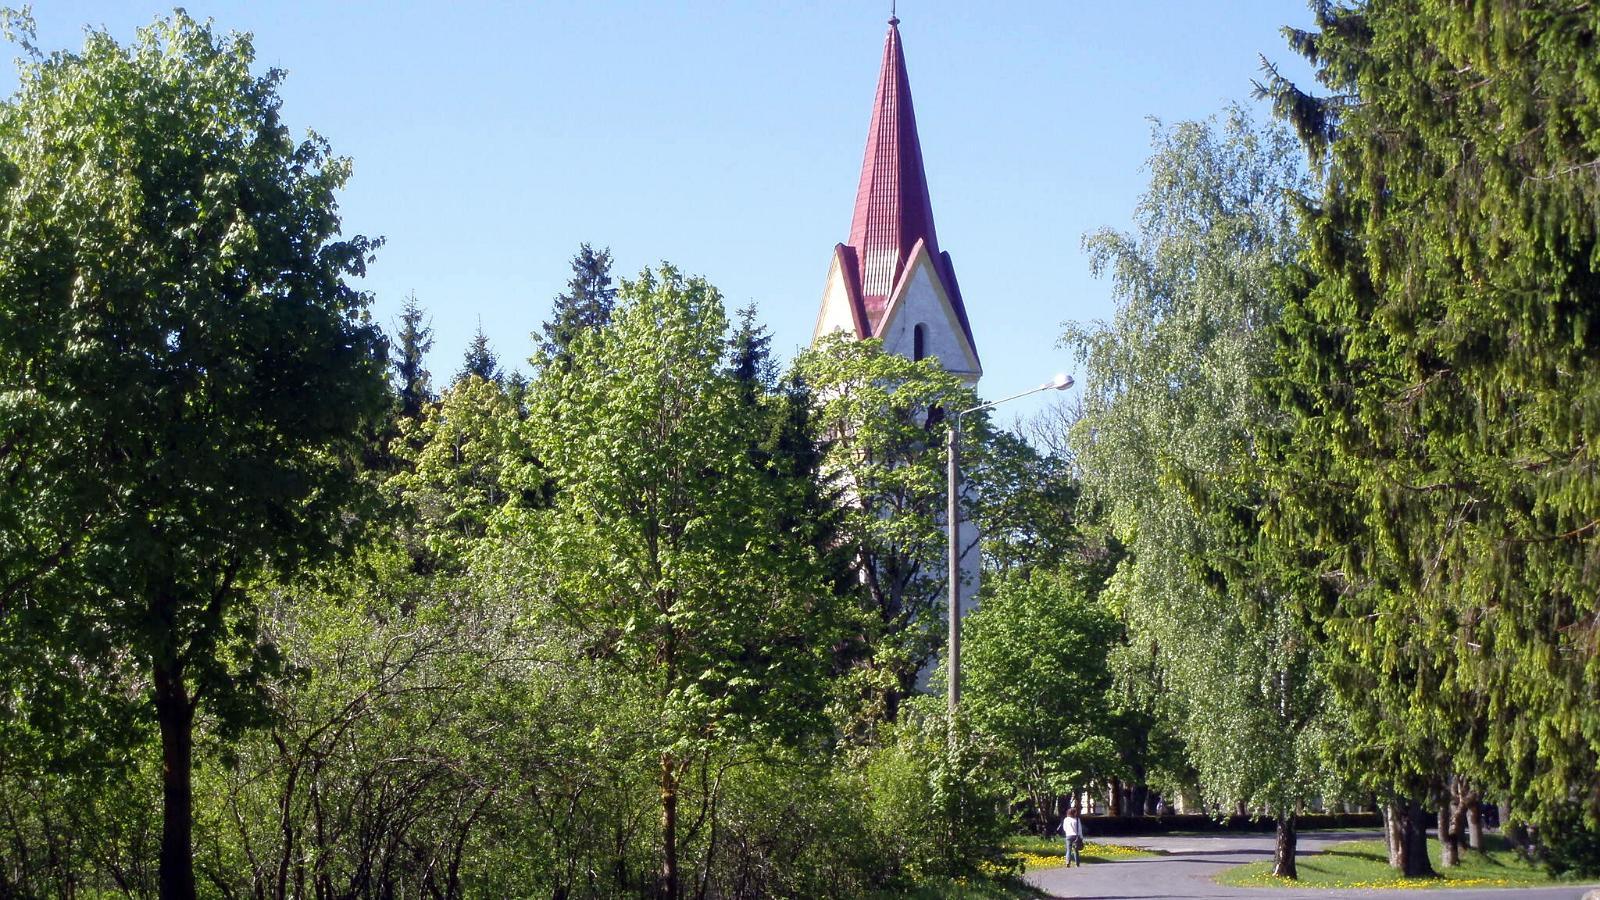 Pärnu-Jaagupi Church